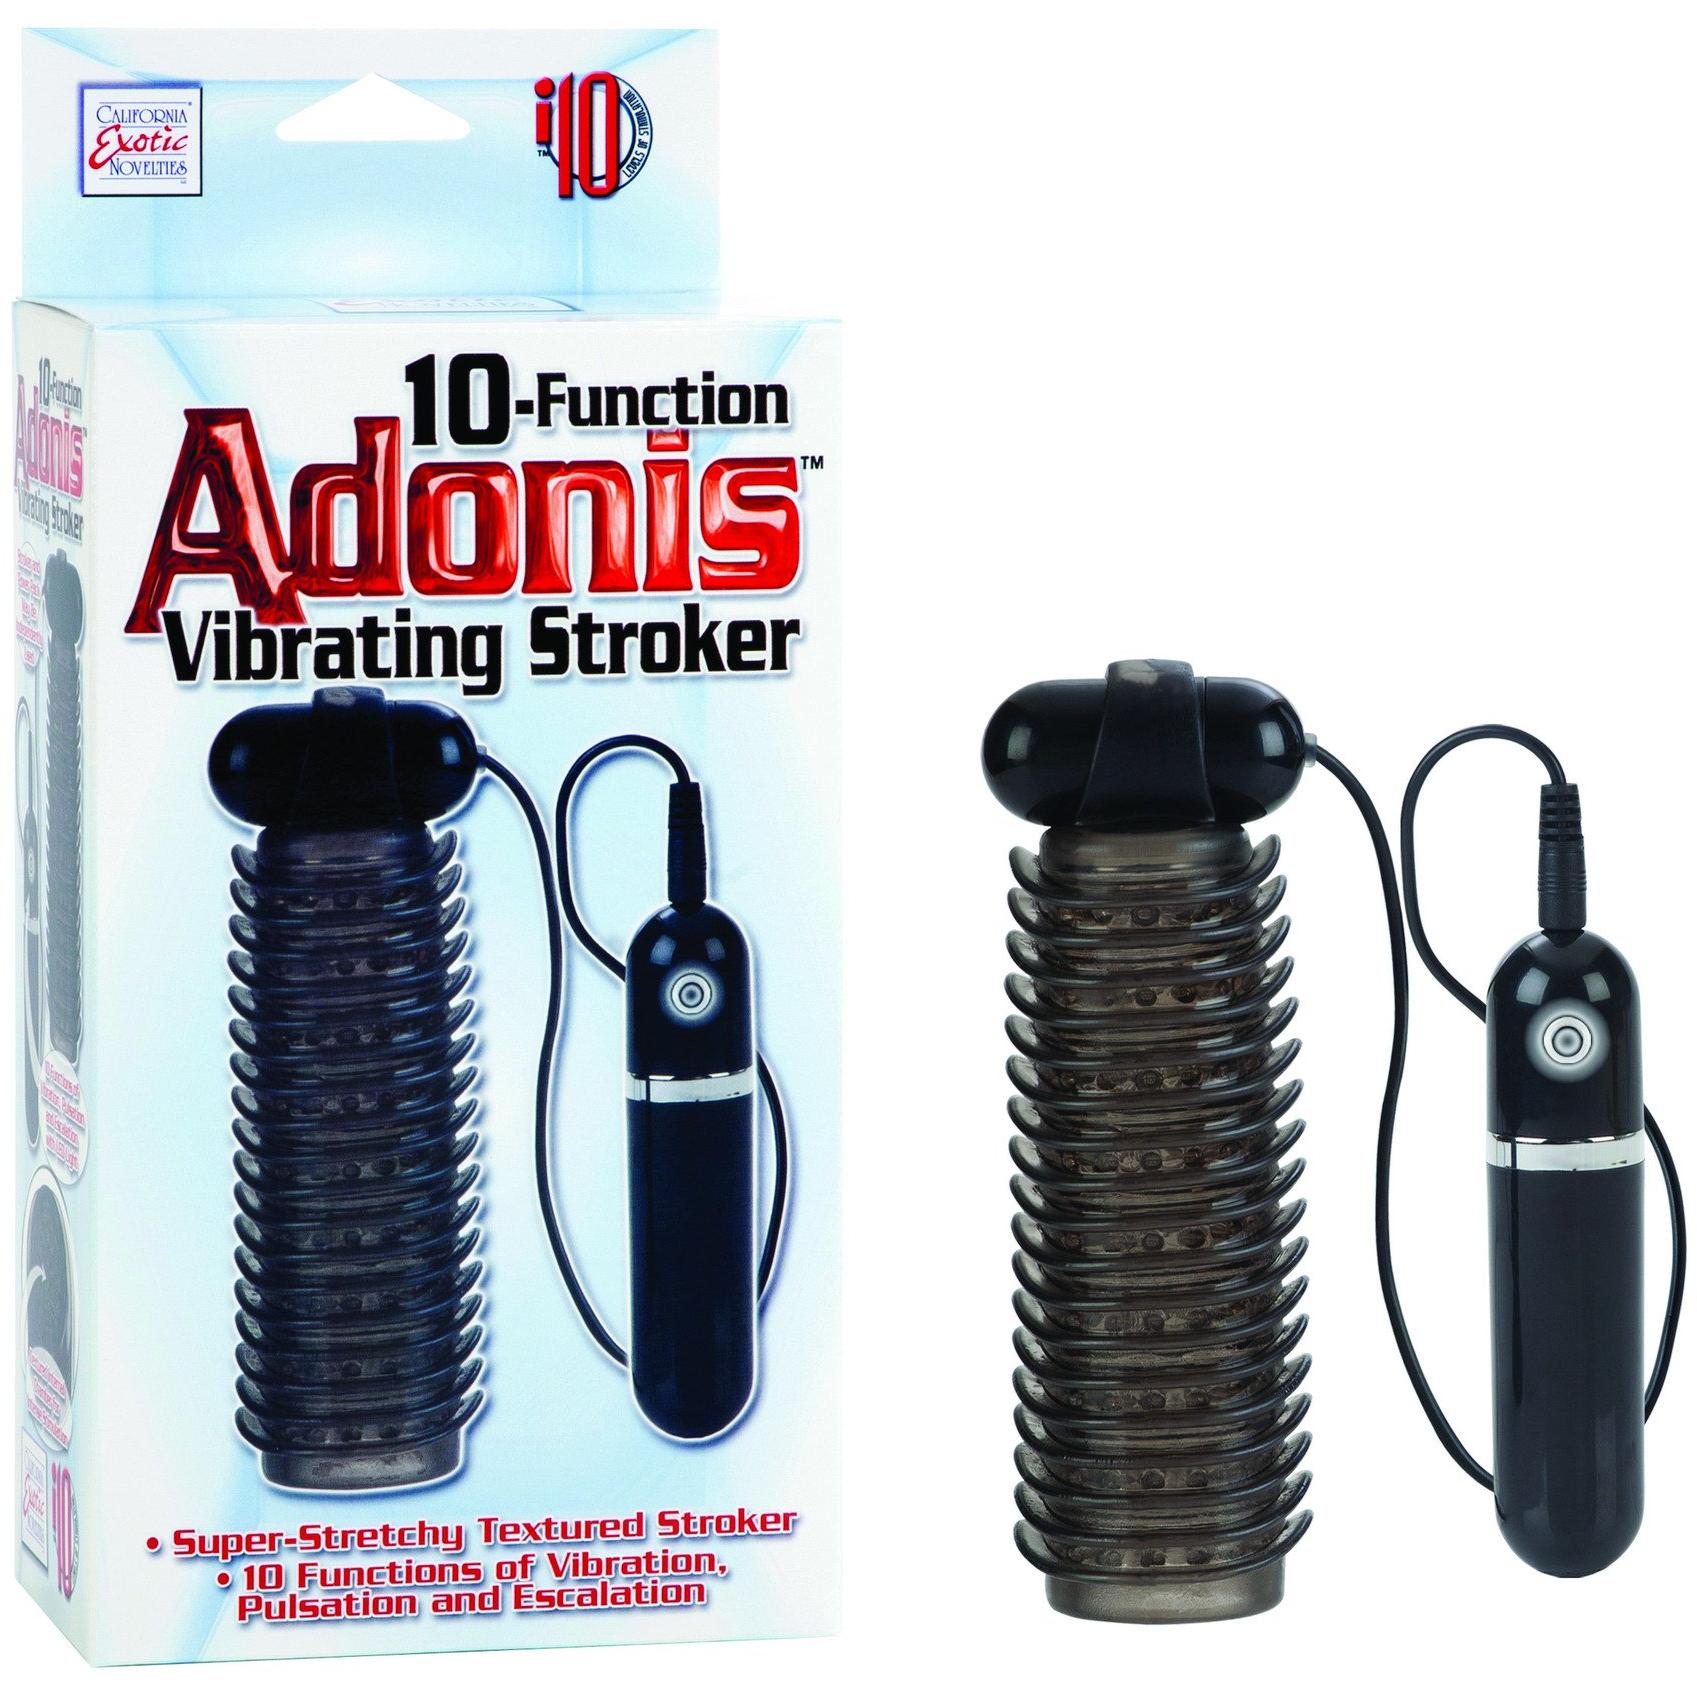 Adonis 10 Function Vibrating Stroker